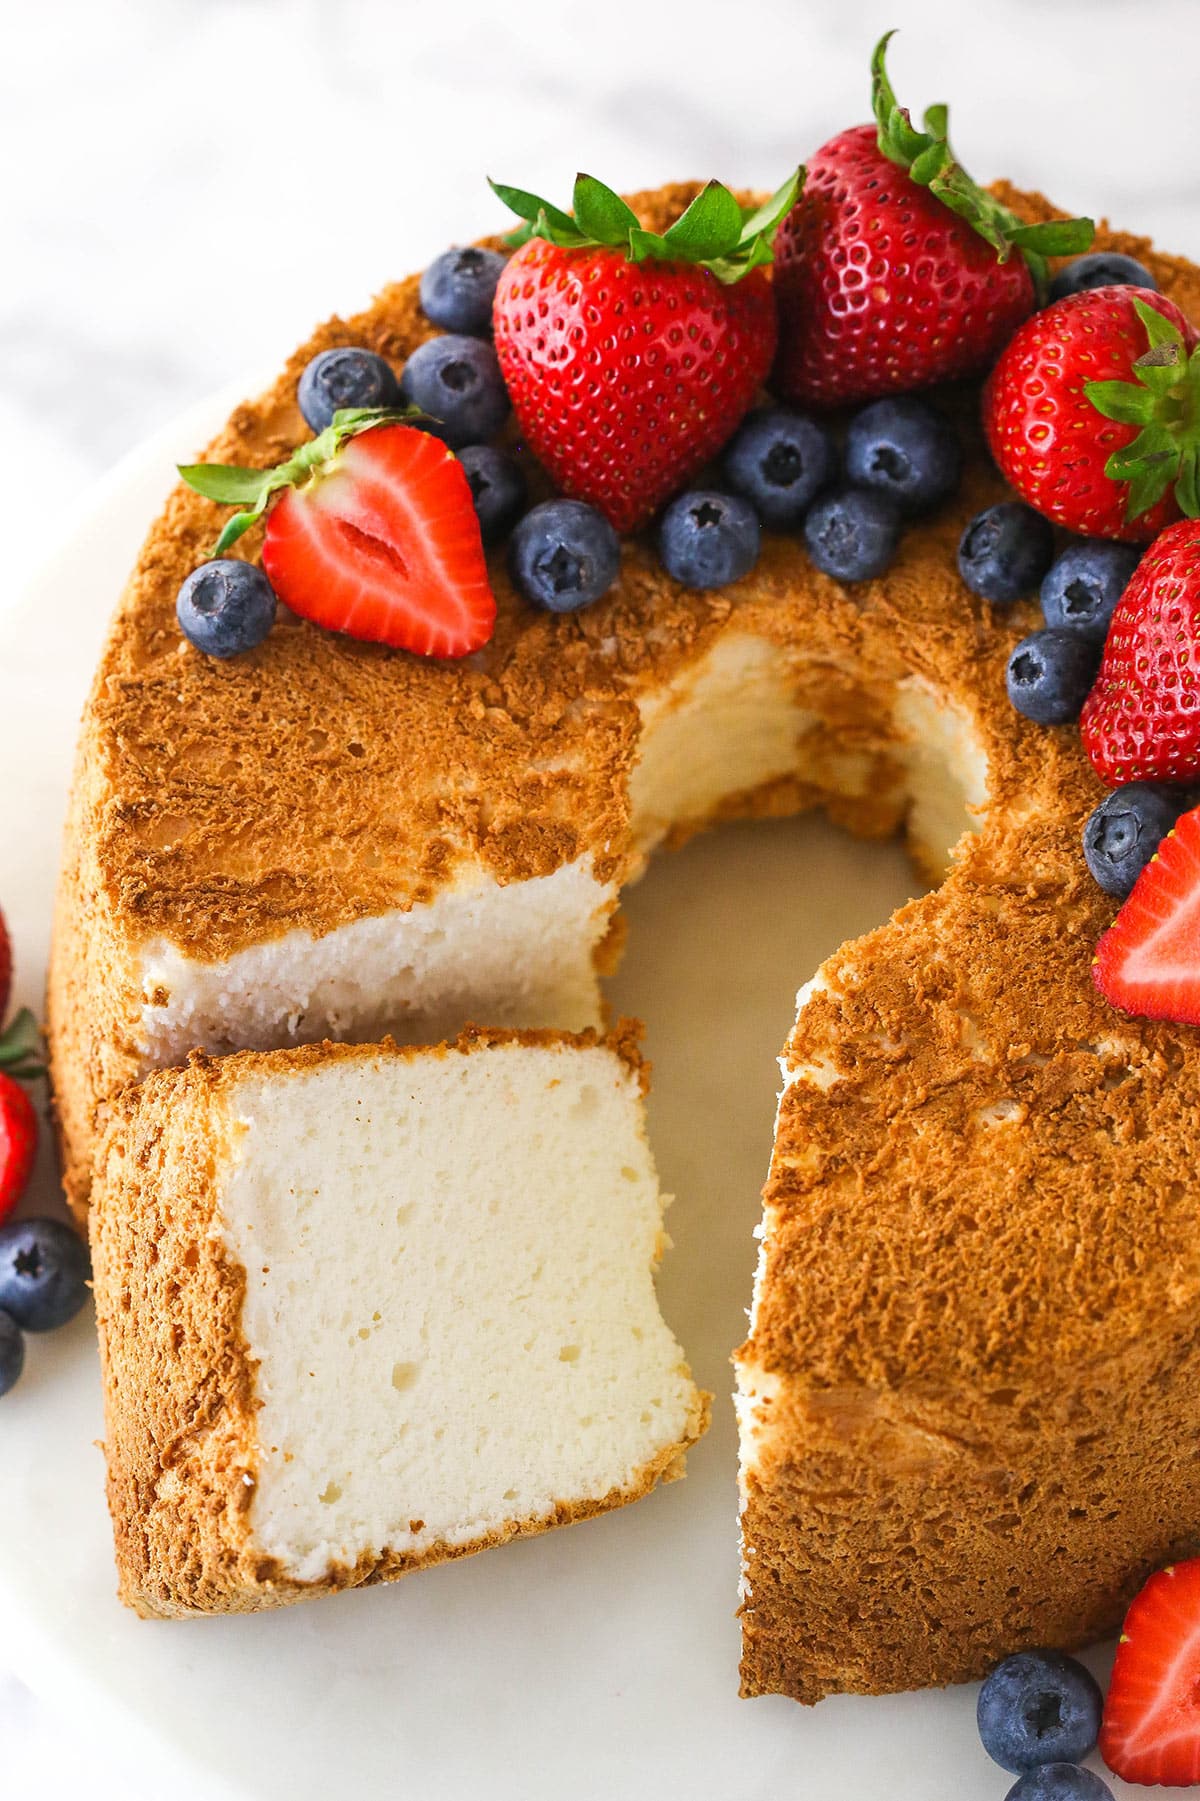 Cake - Simple English Wikipedia, the free encyclopedia